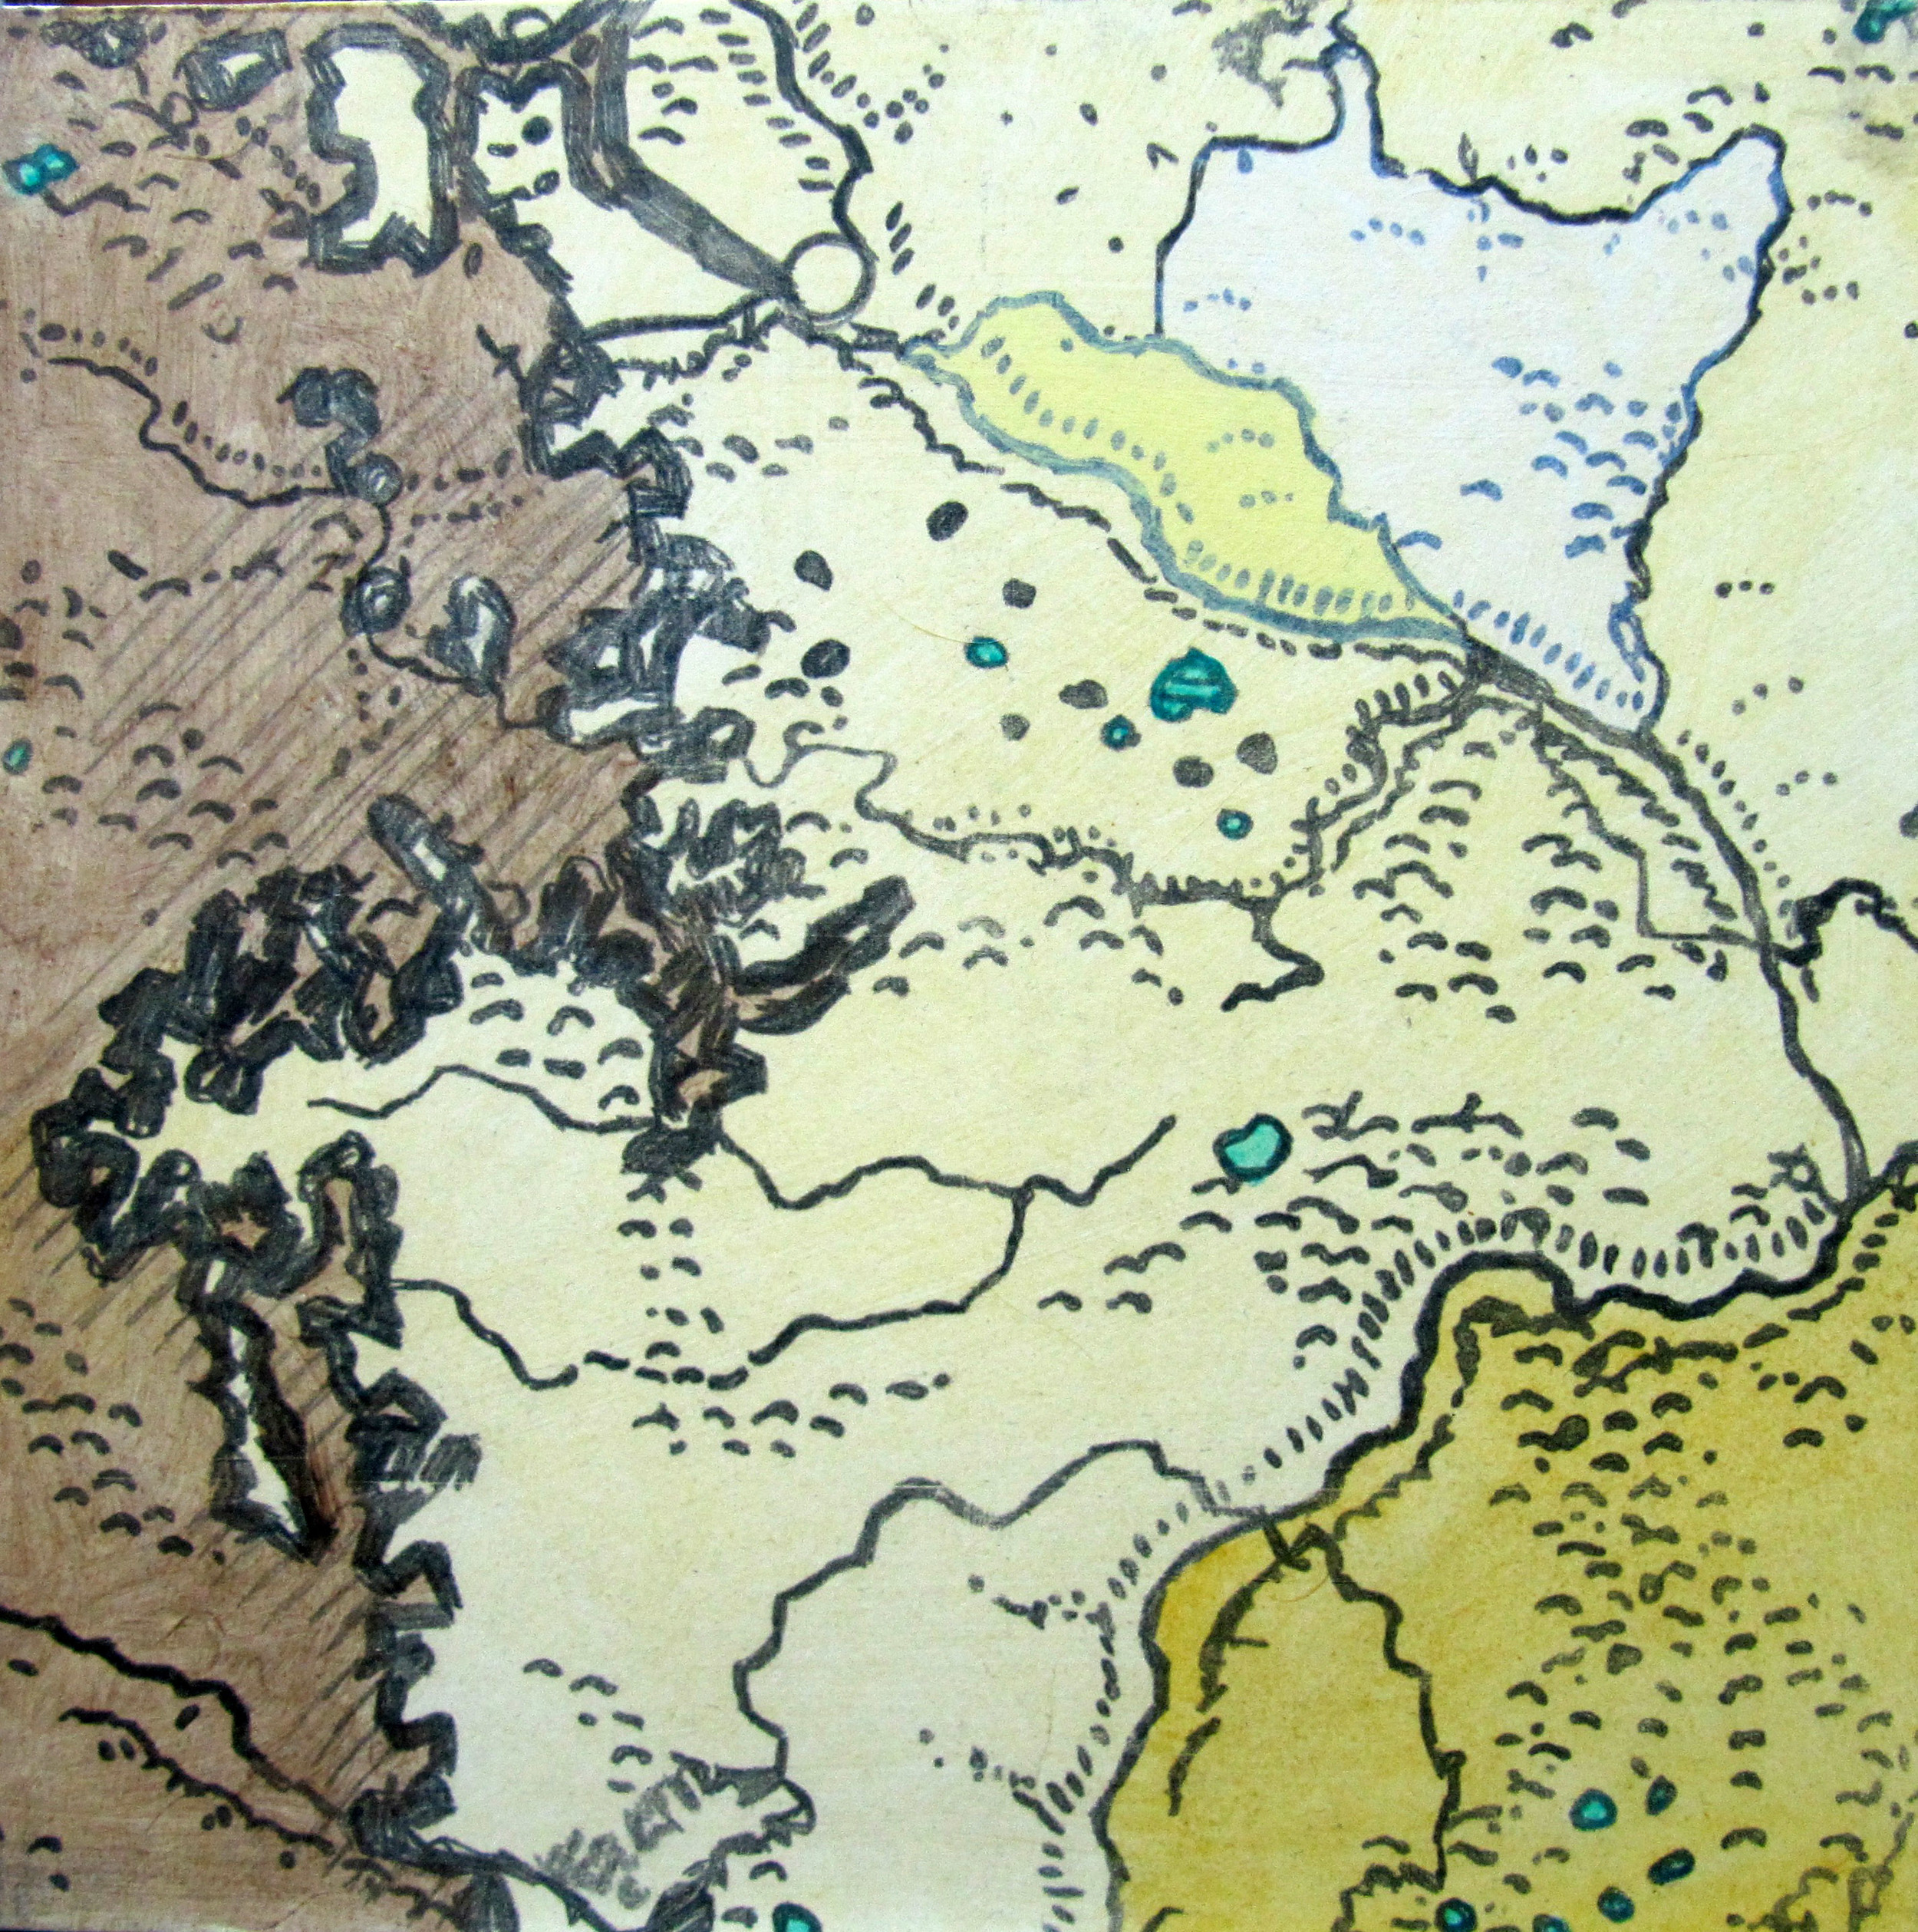 Map2.jpg